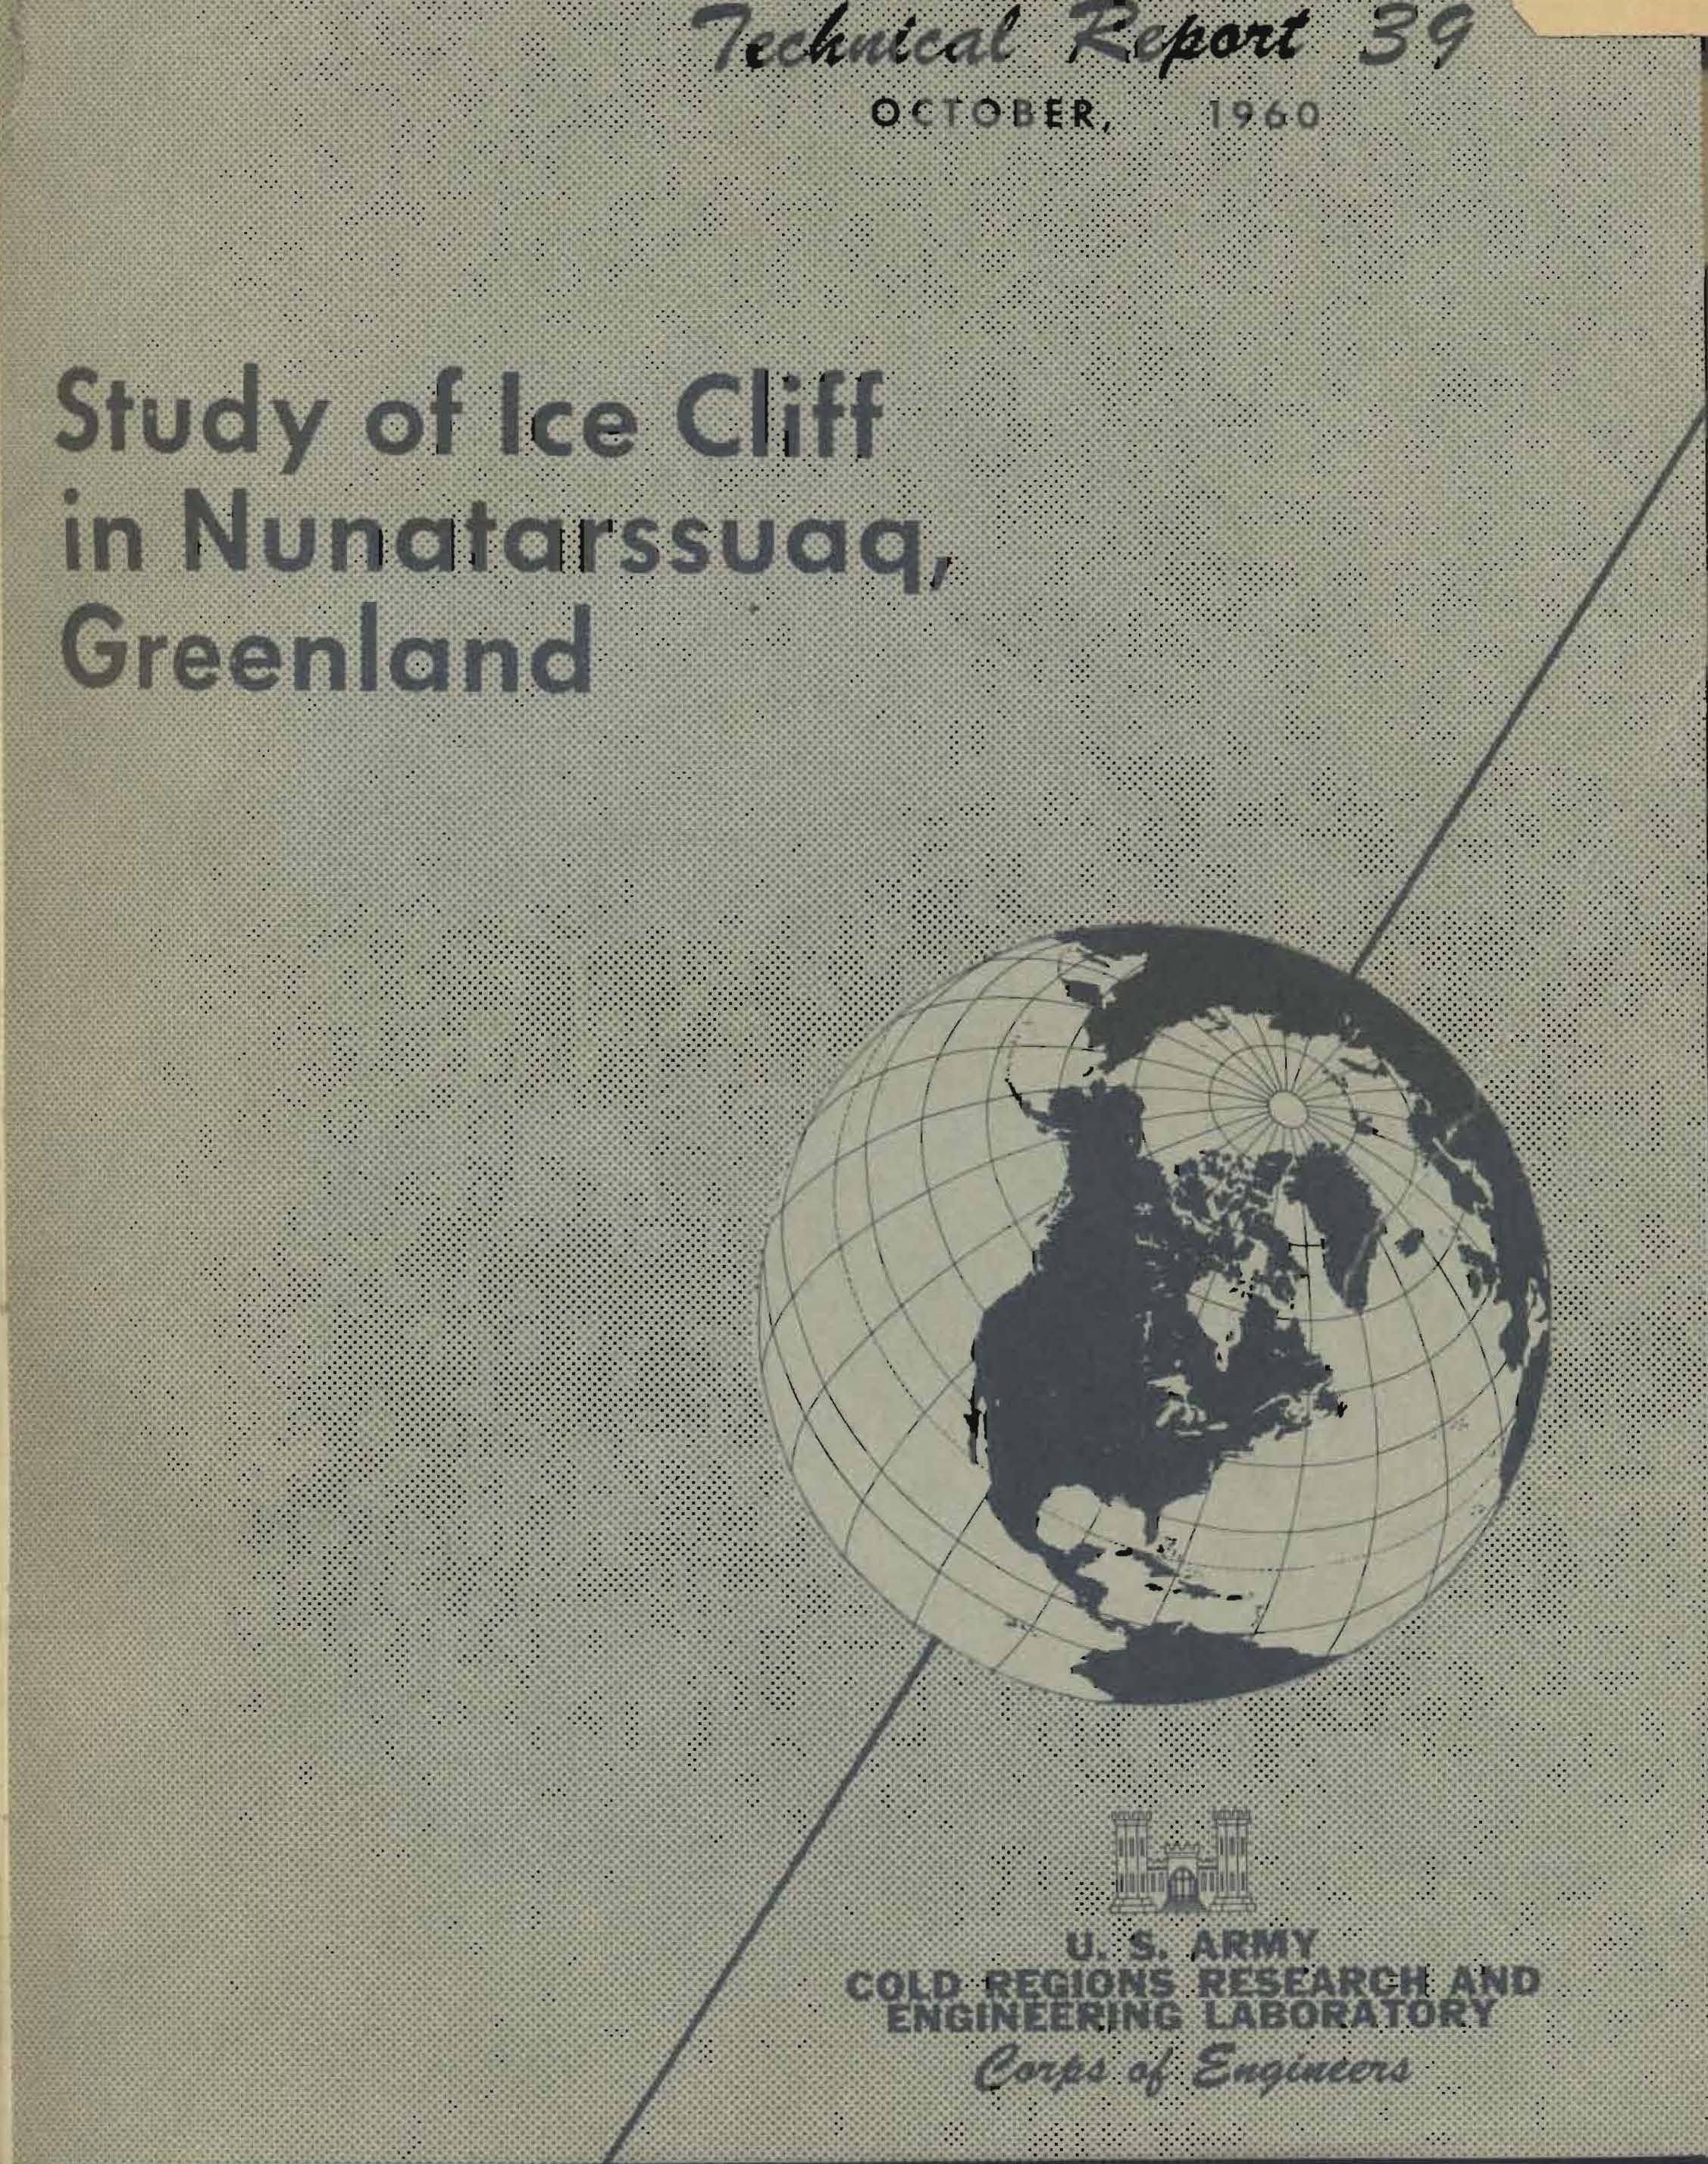 Studyof Ice Cliff in Nunatarssuaq,Greenland